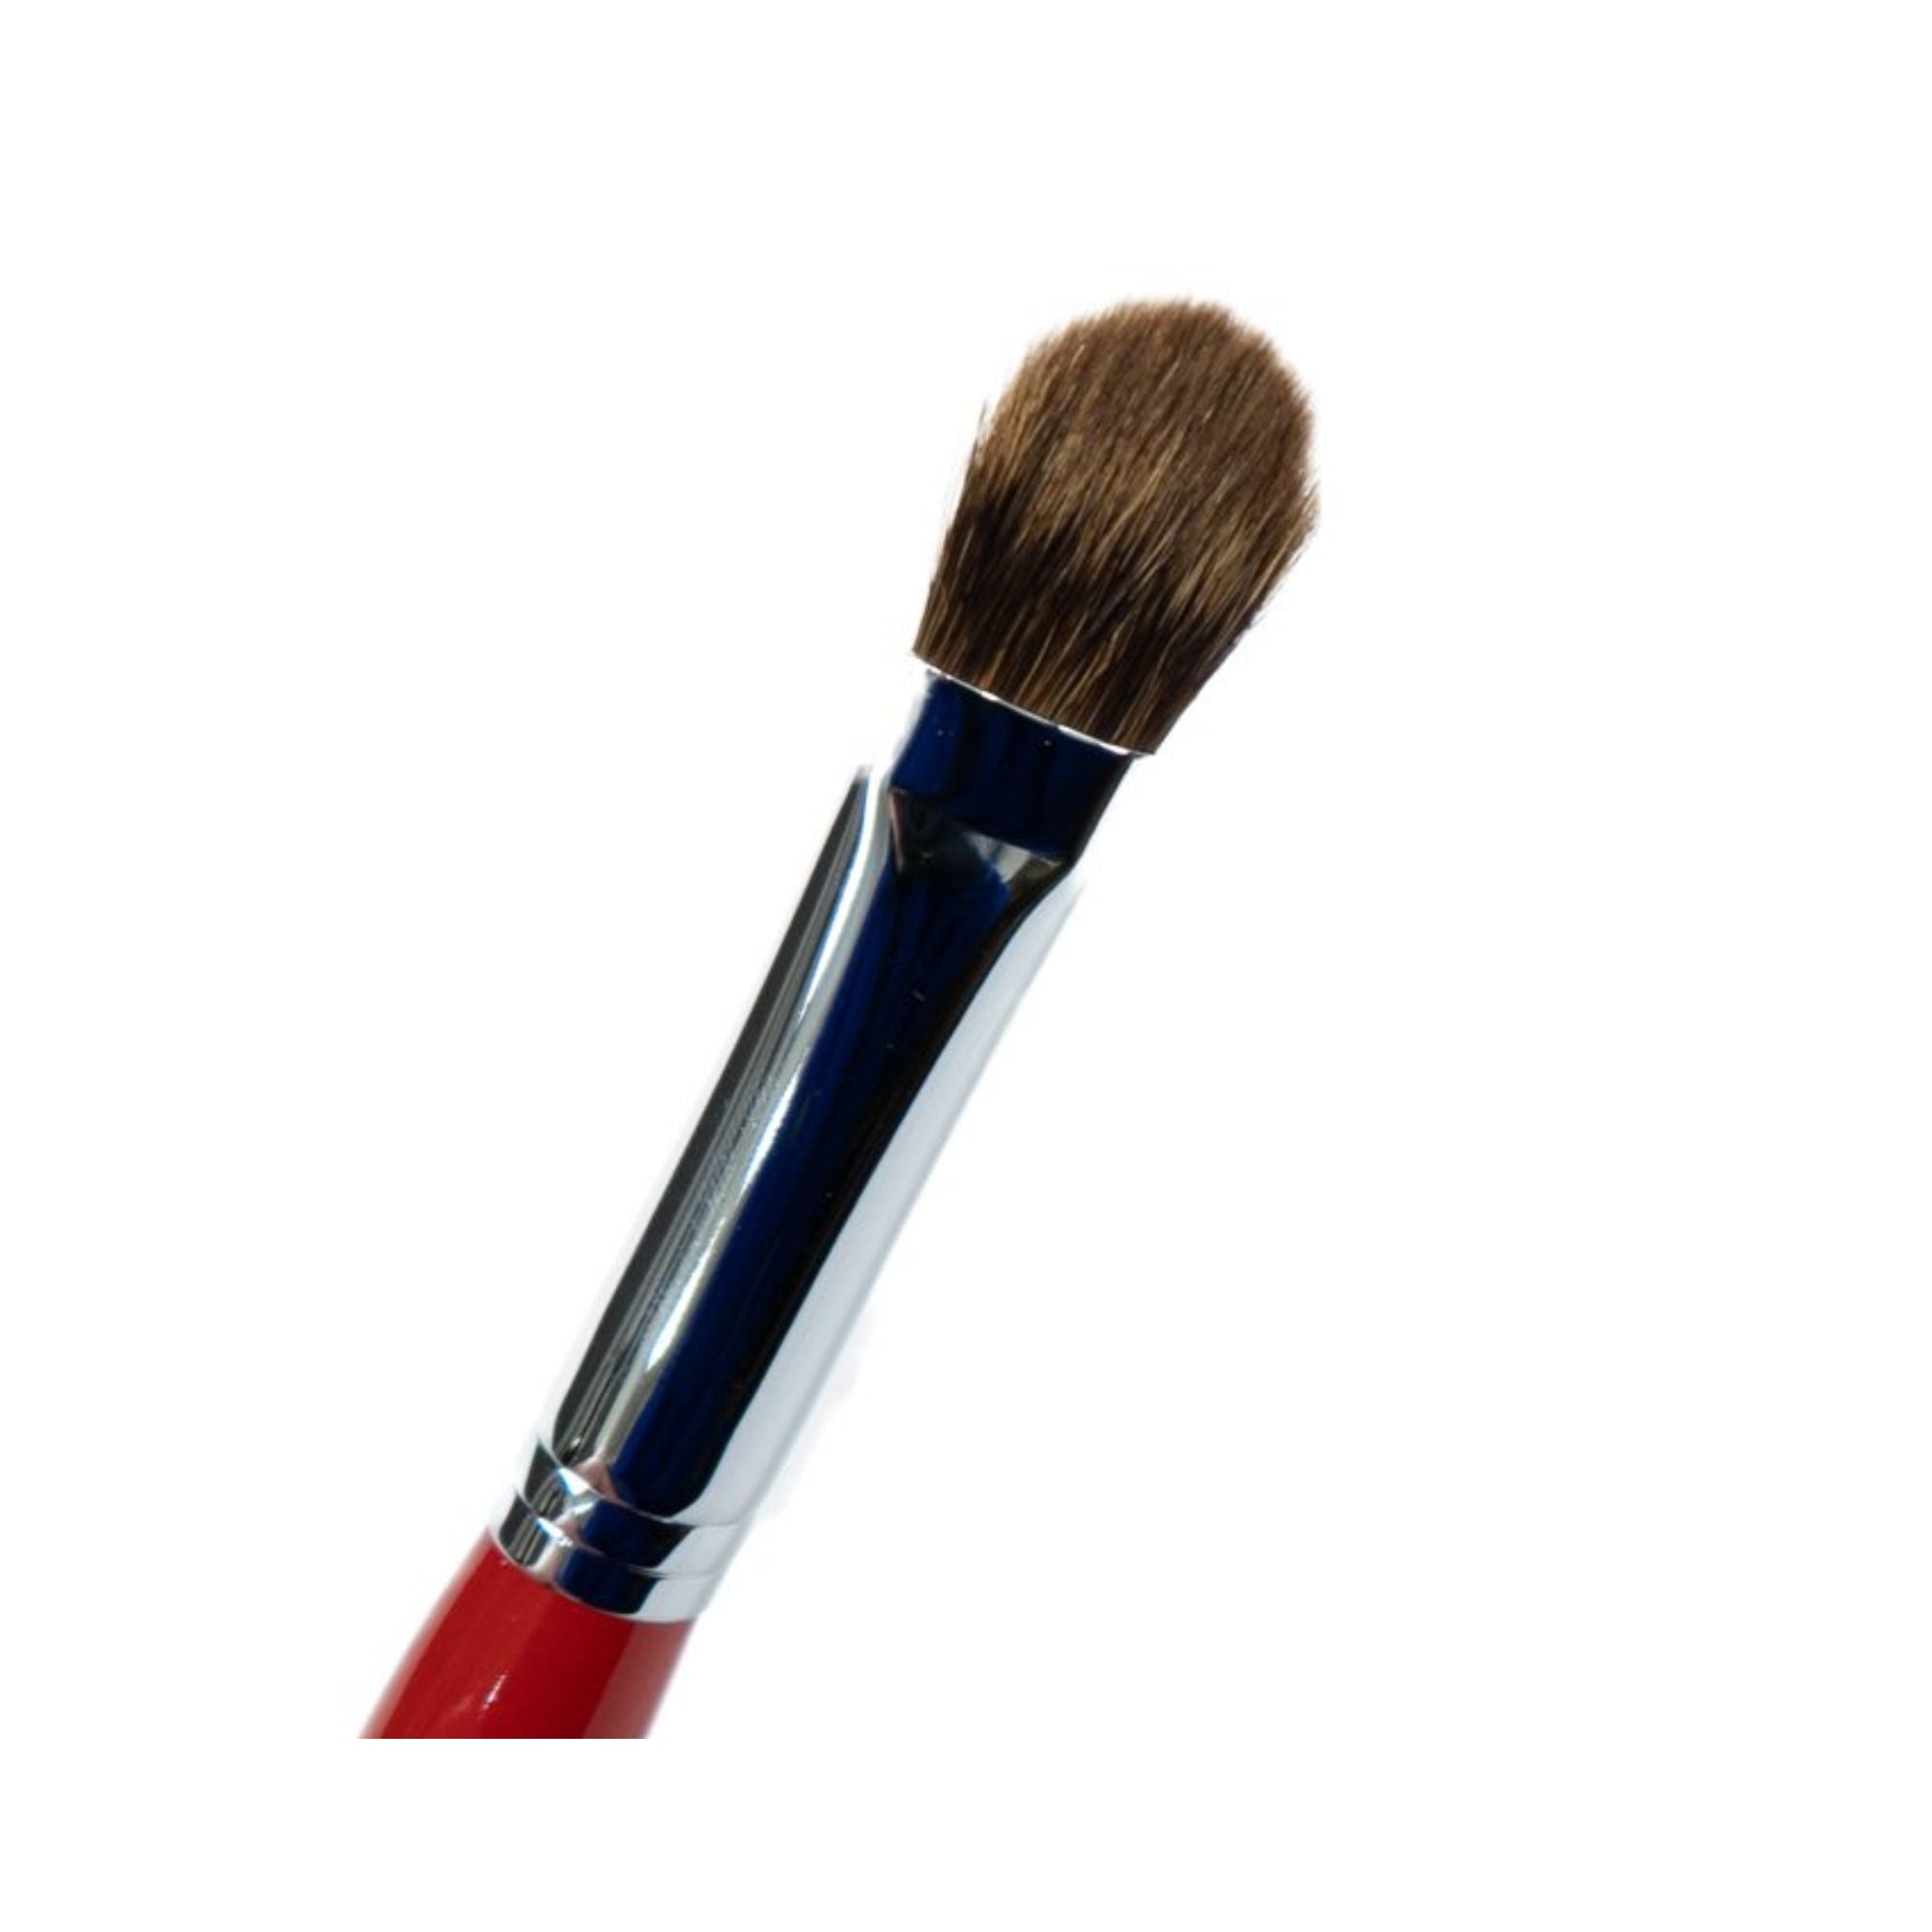 Tanseido CQ 12SP Eyeshadow Brush - Fude Beauty, Japanese Makeup Brushes